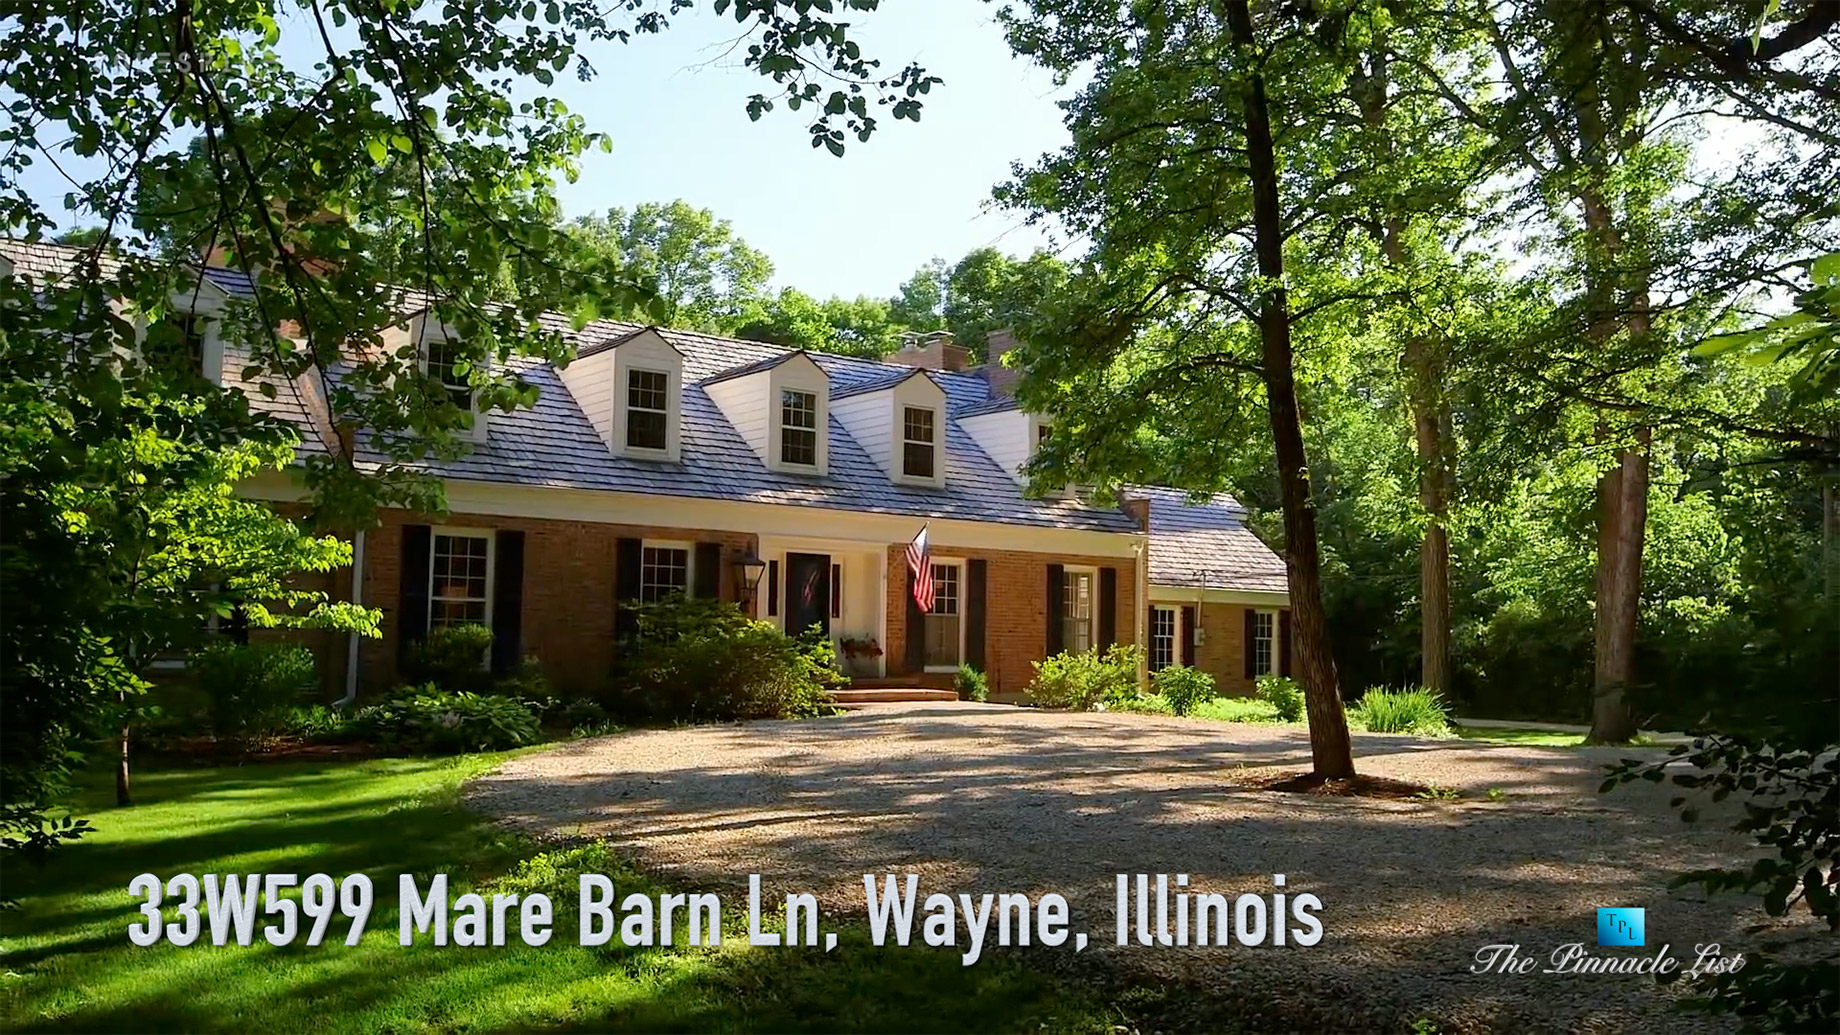 33W599 Mare Barn Ln, Wayne, IL, USA - Luxury Real Estate